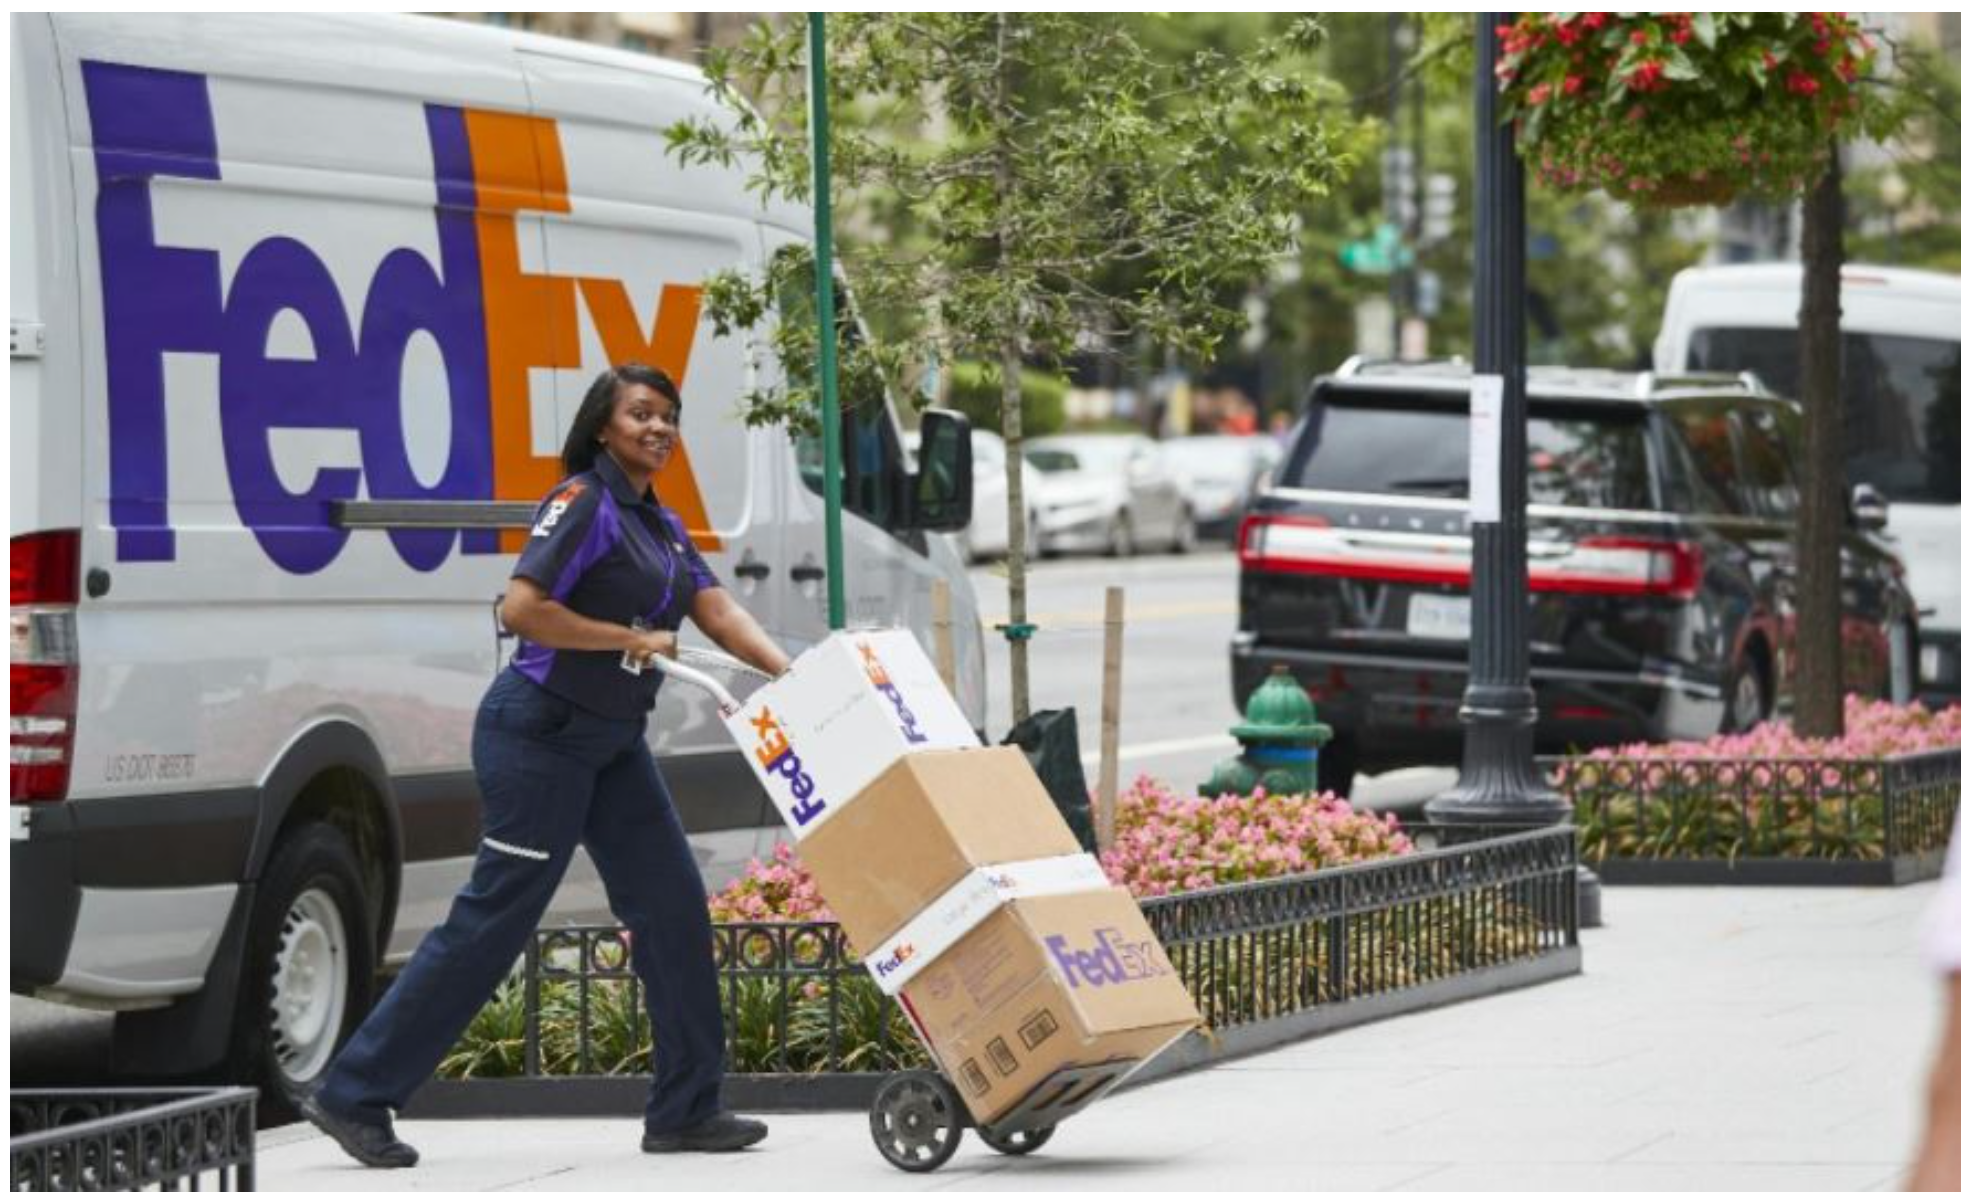 FedEx Employee - access your employee benefits online